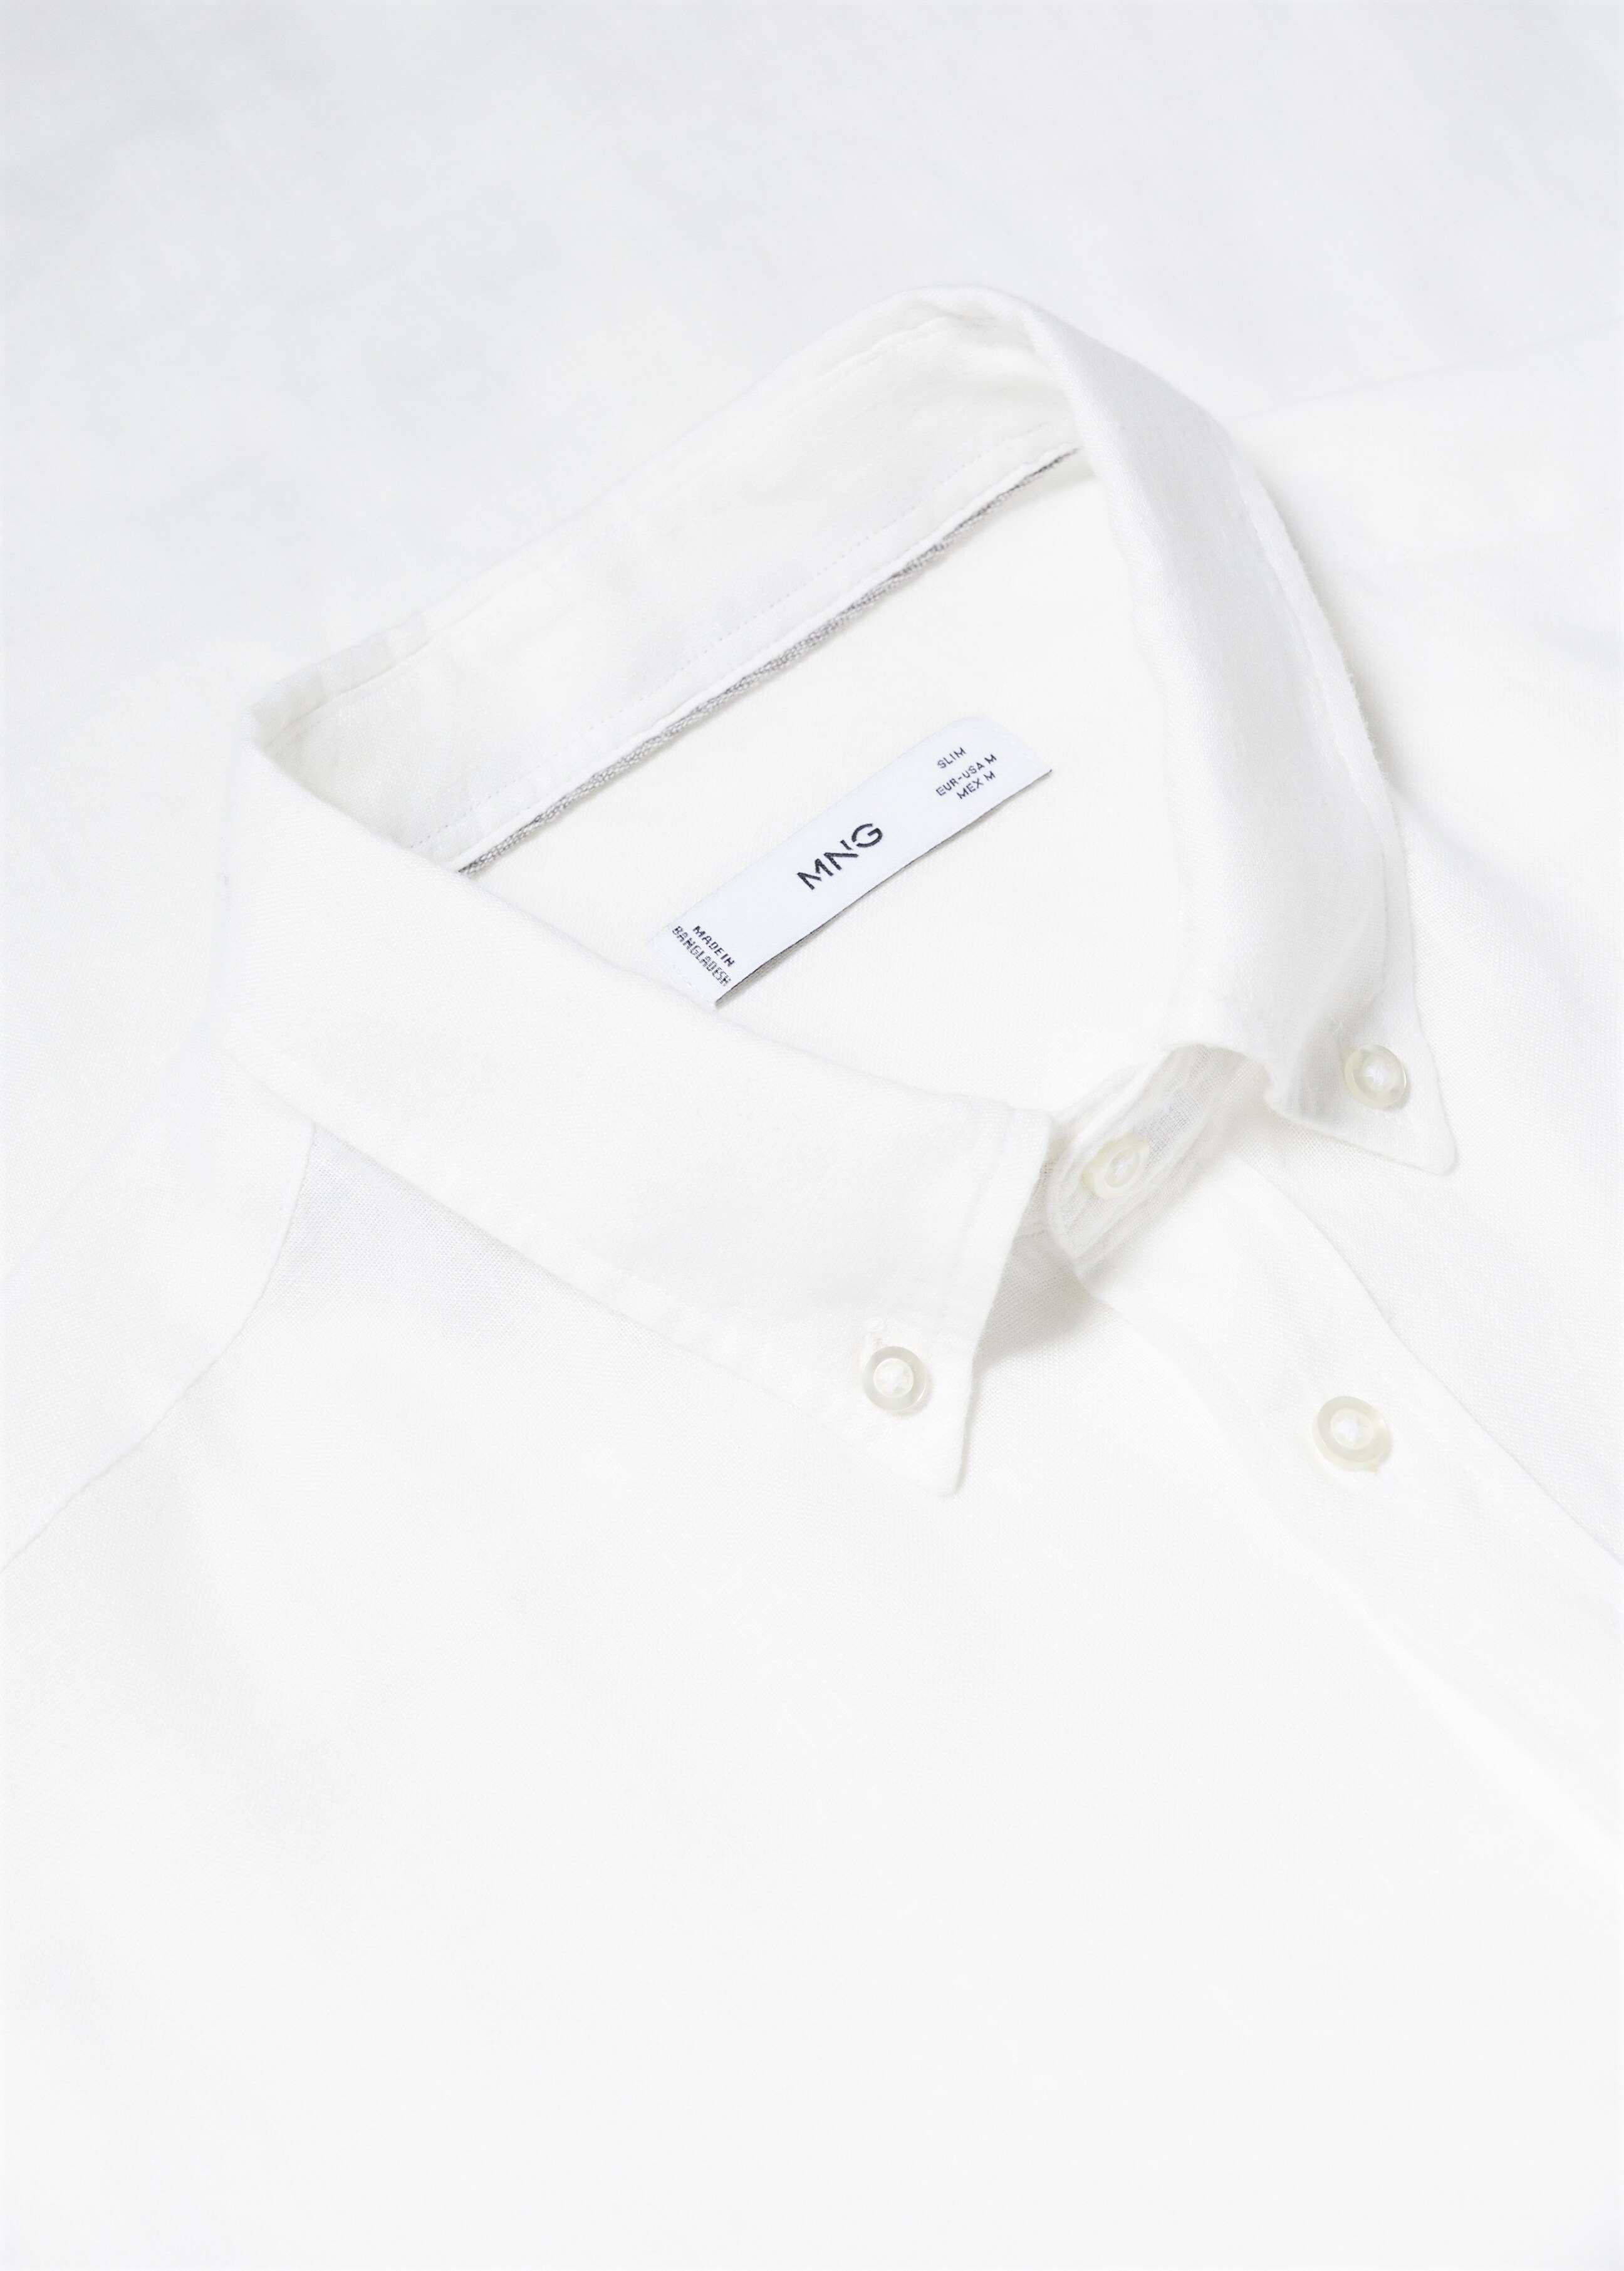 100% linen slim-fit shirt - Details of the article 8